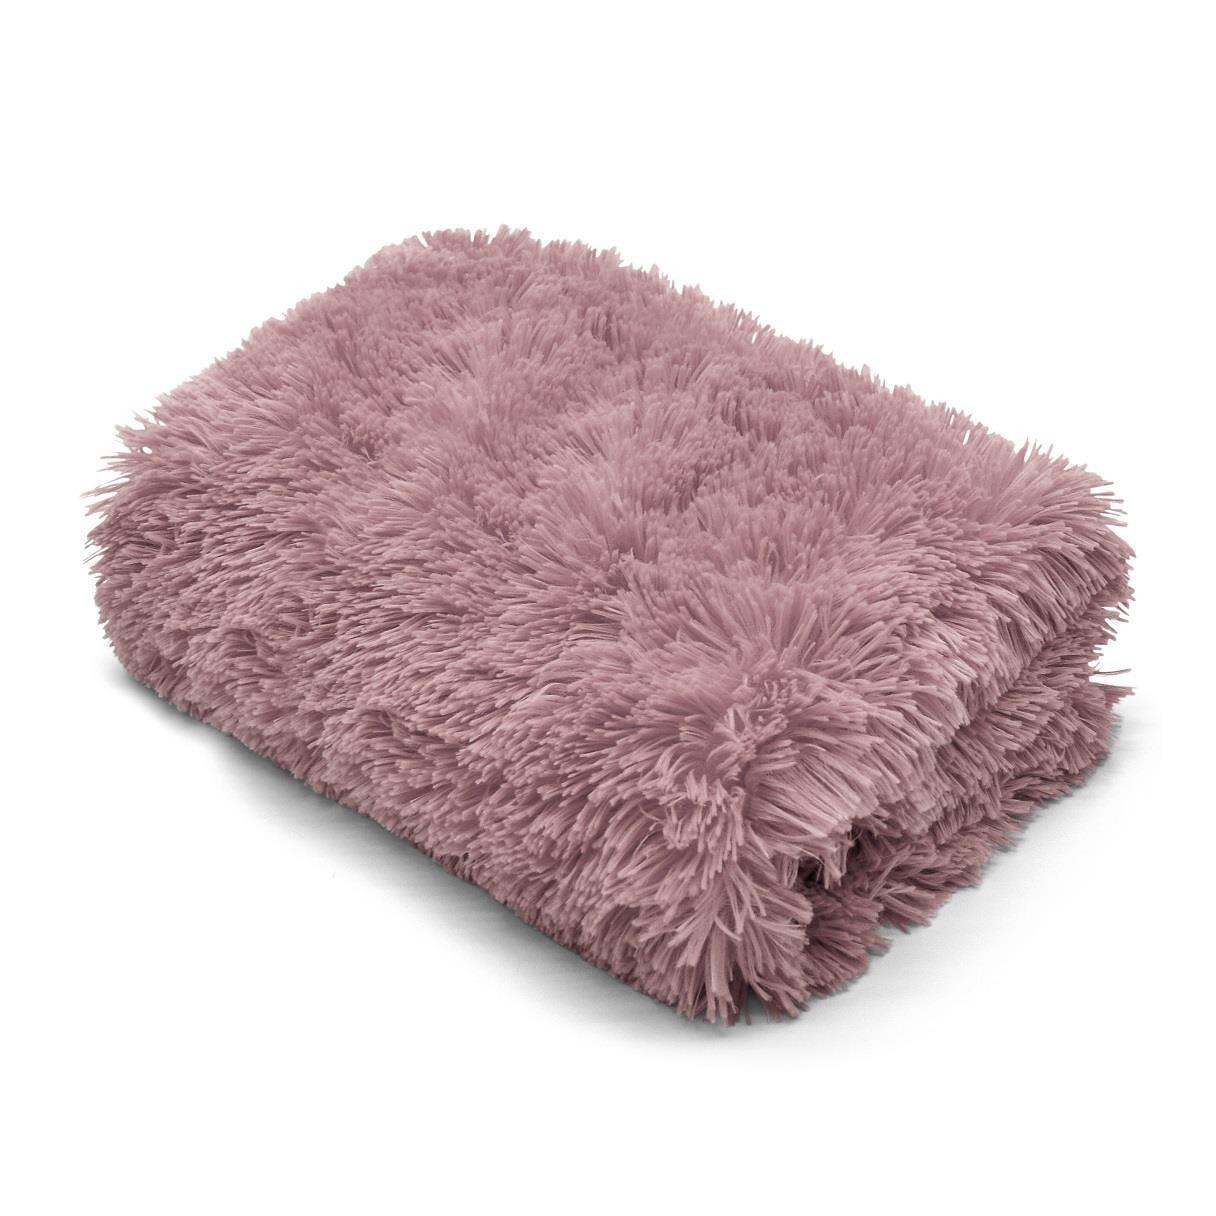 Cuddles Luxury Faux Fur Soft Blanket - image 1